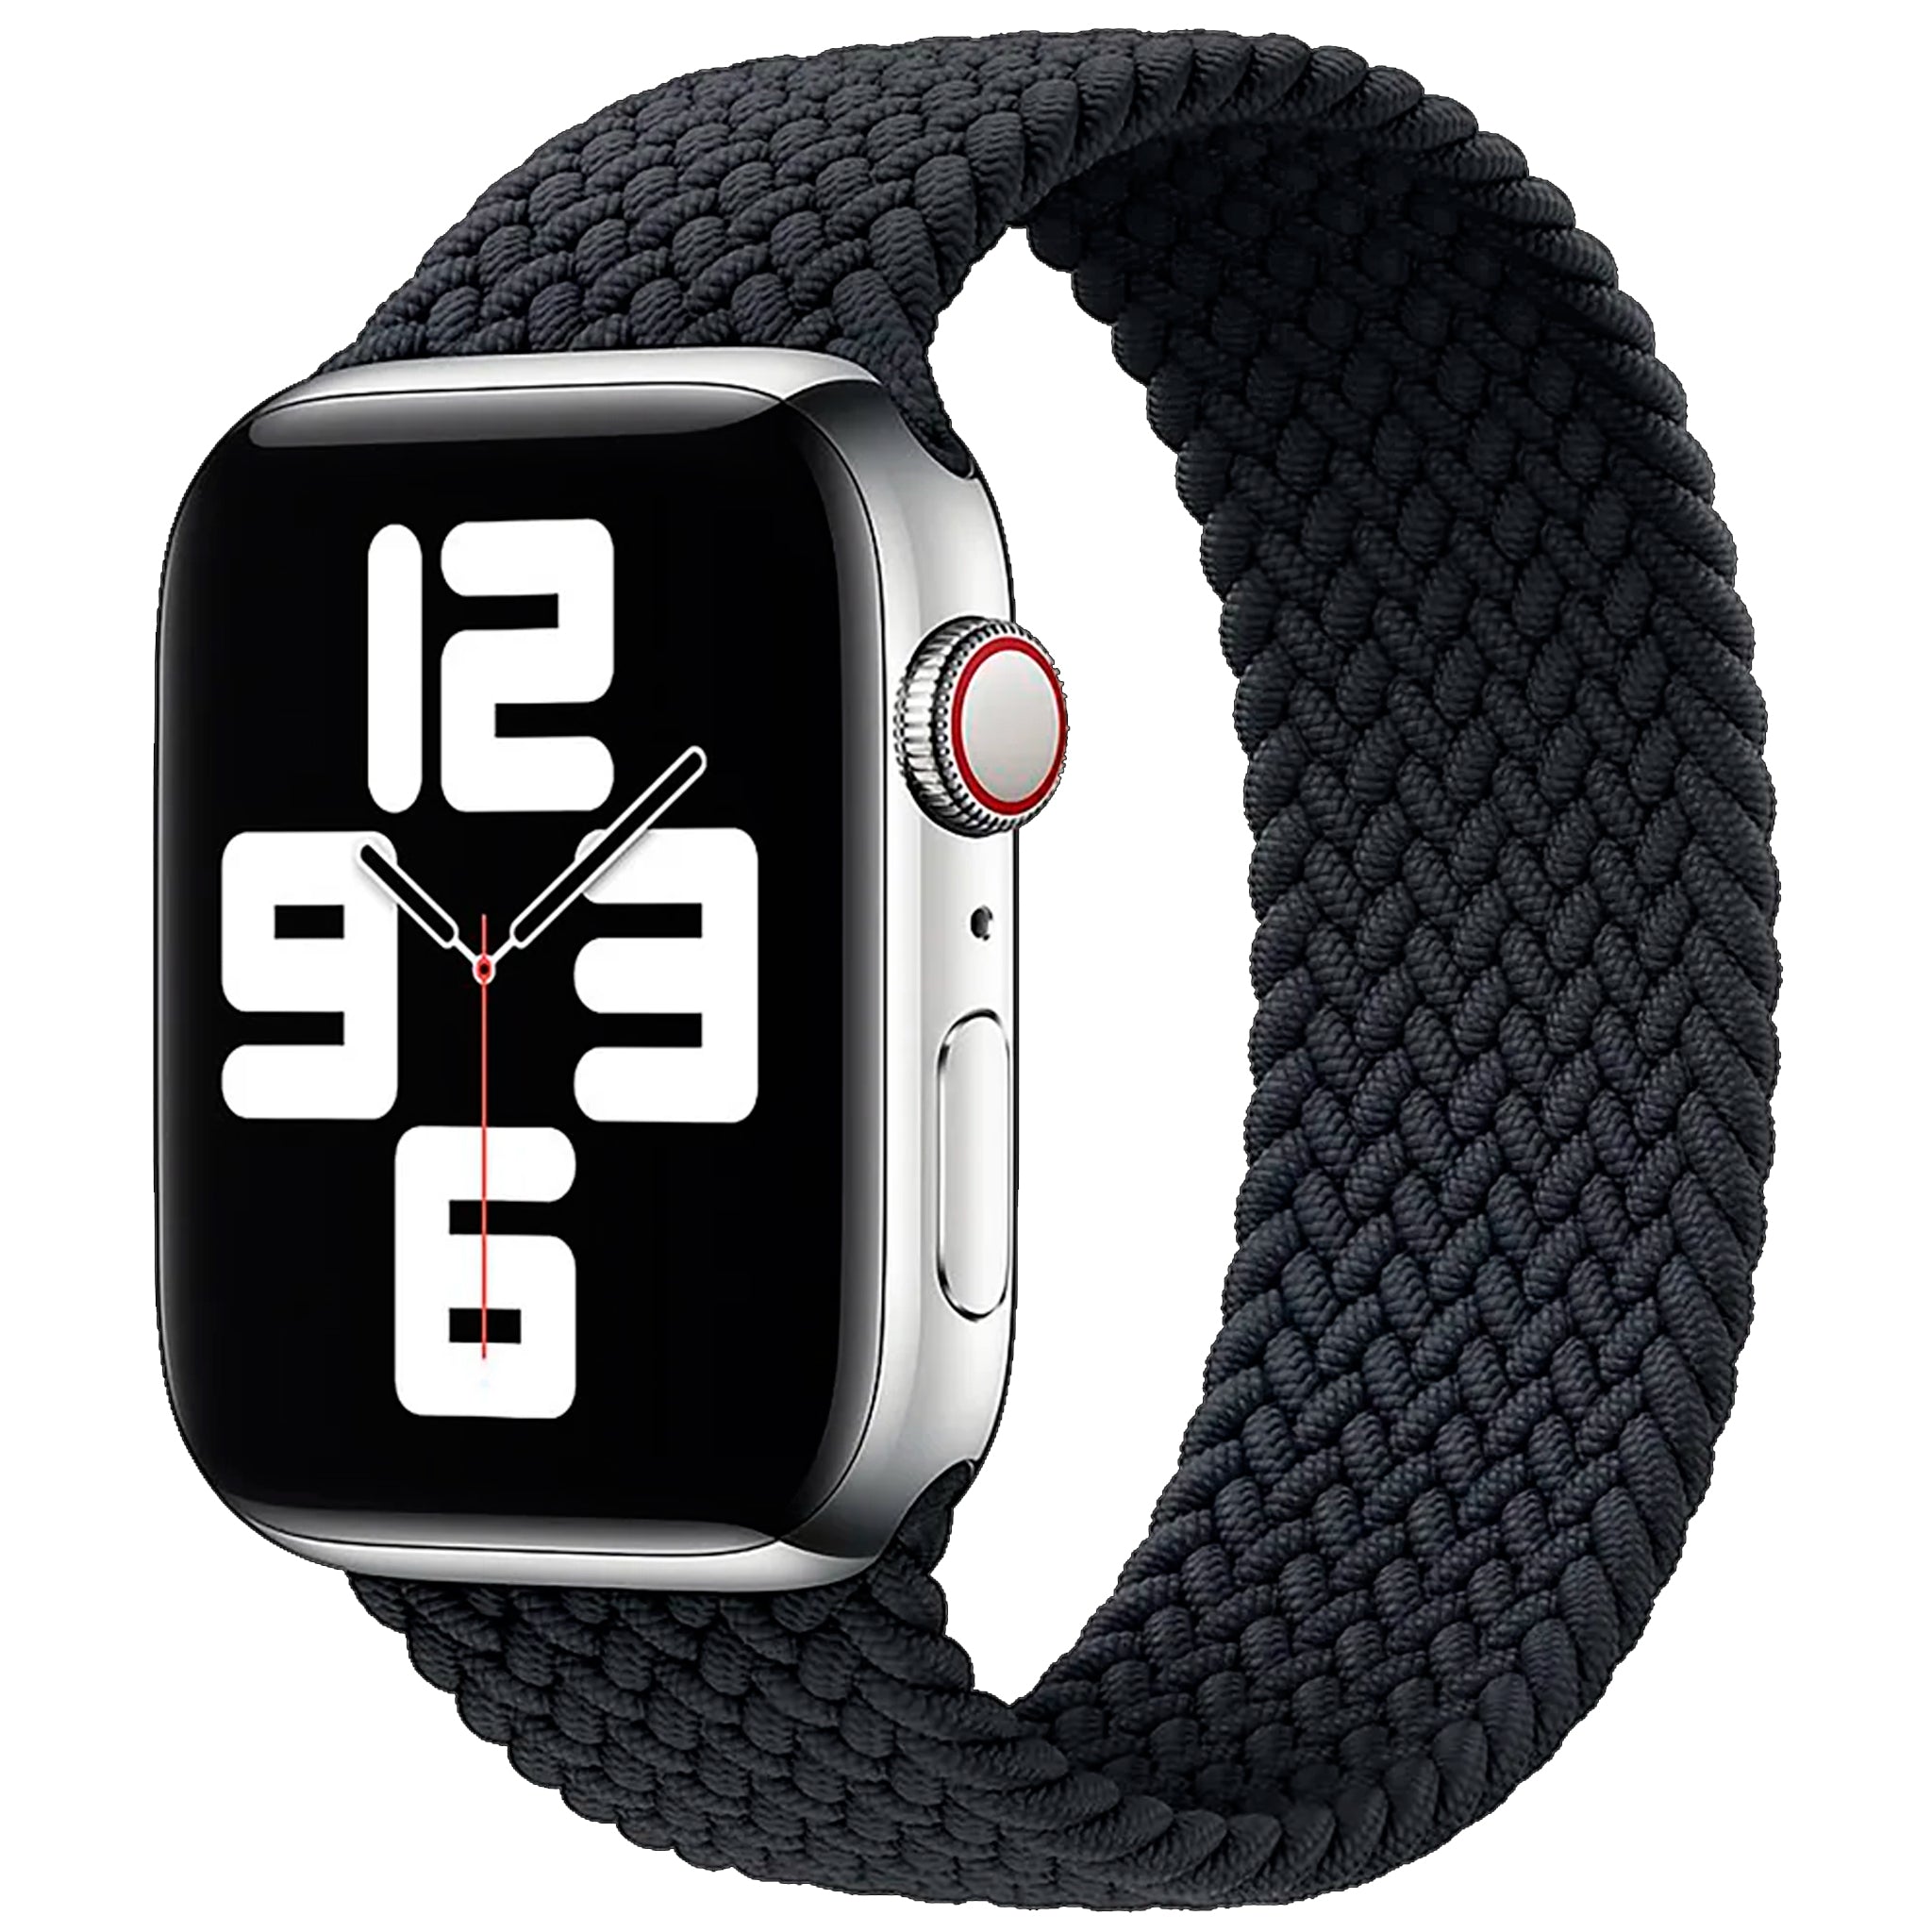 Itskins - Nylon Watch Band For Apple Watch 44mm - Black